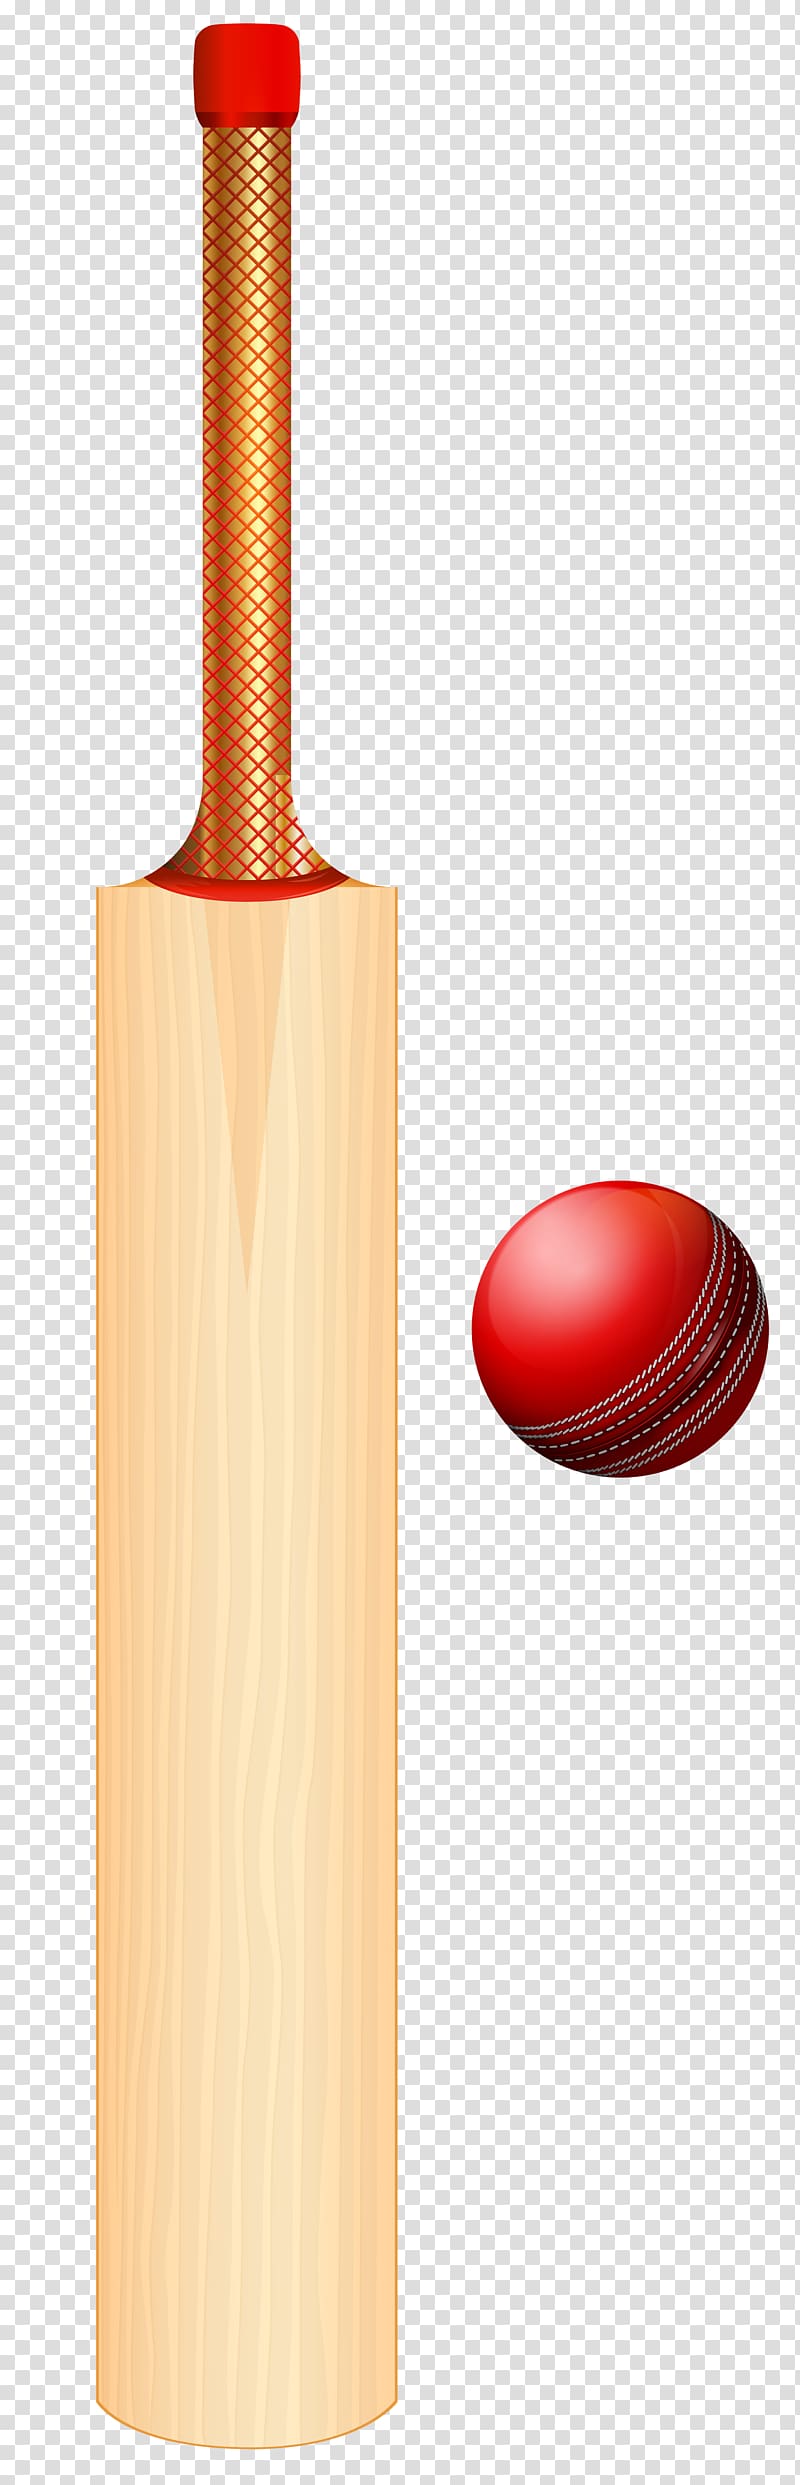 brown cricket bat and red ball , Cricket bat Batting , Cricket Set transparent background PNG clipart